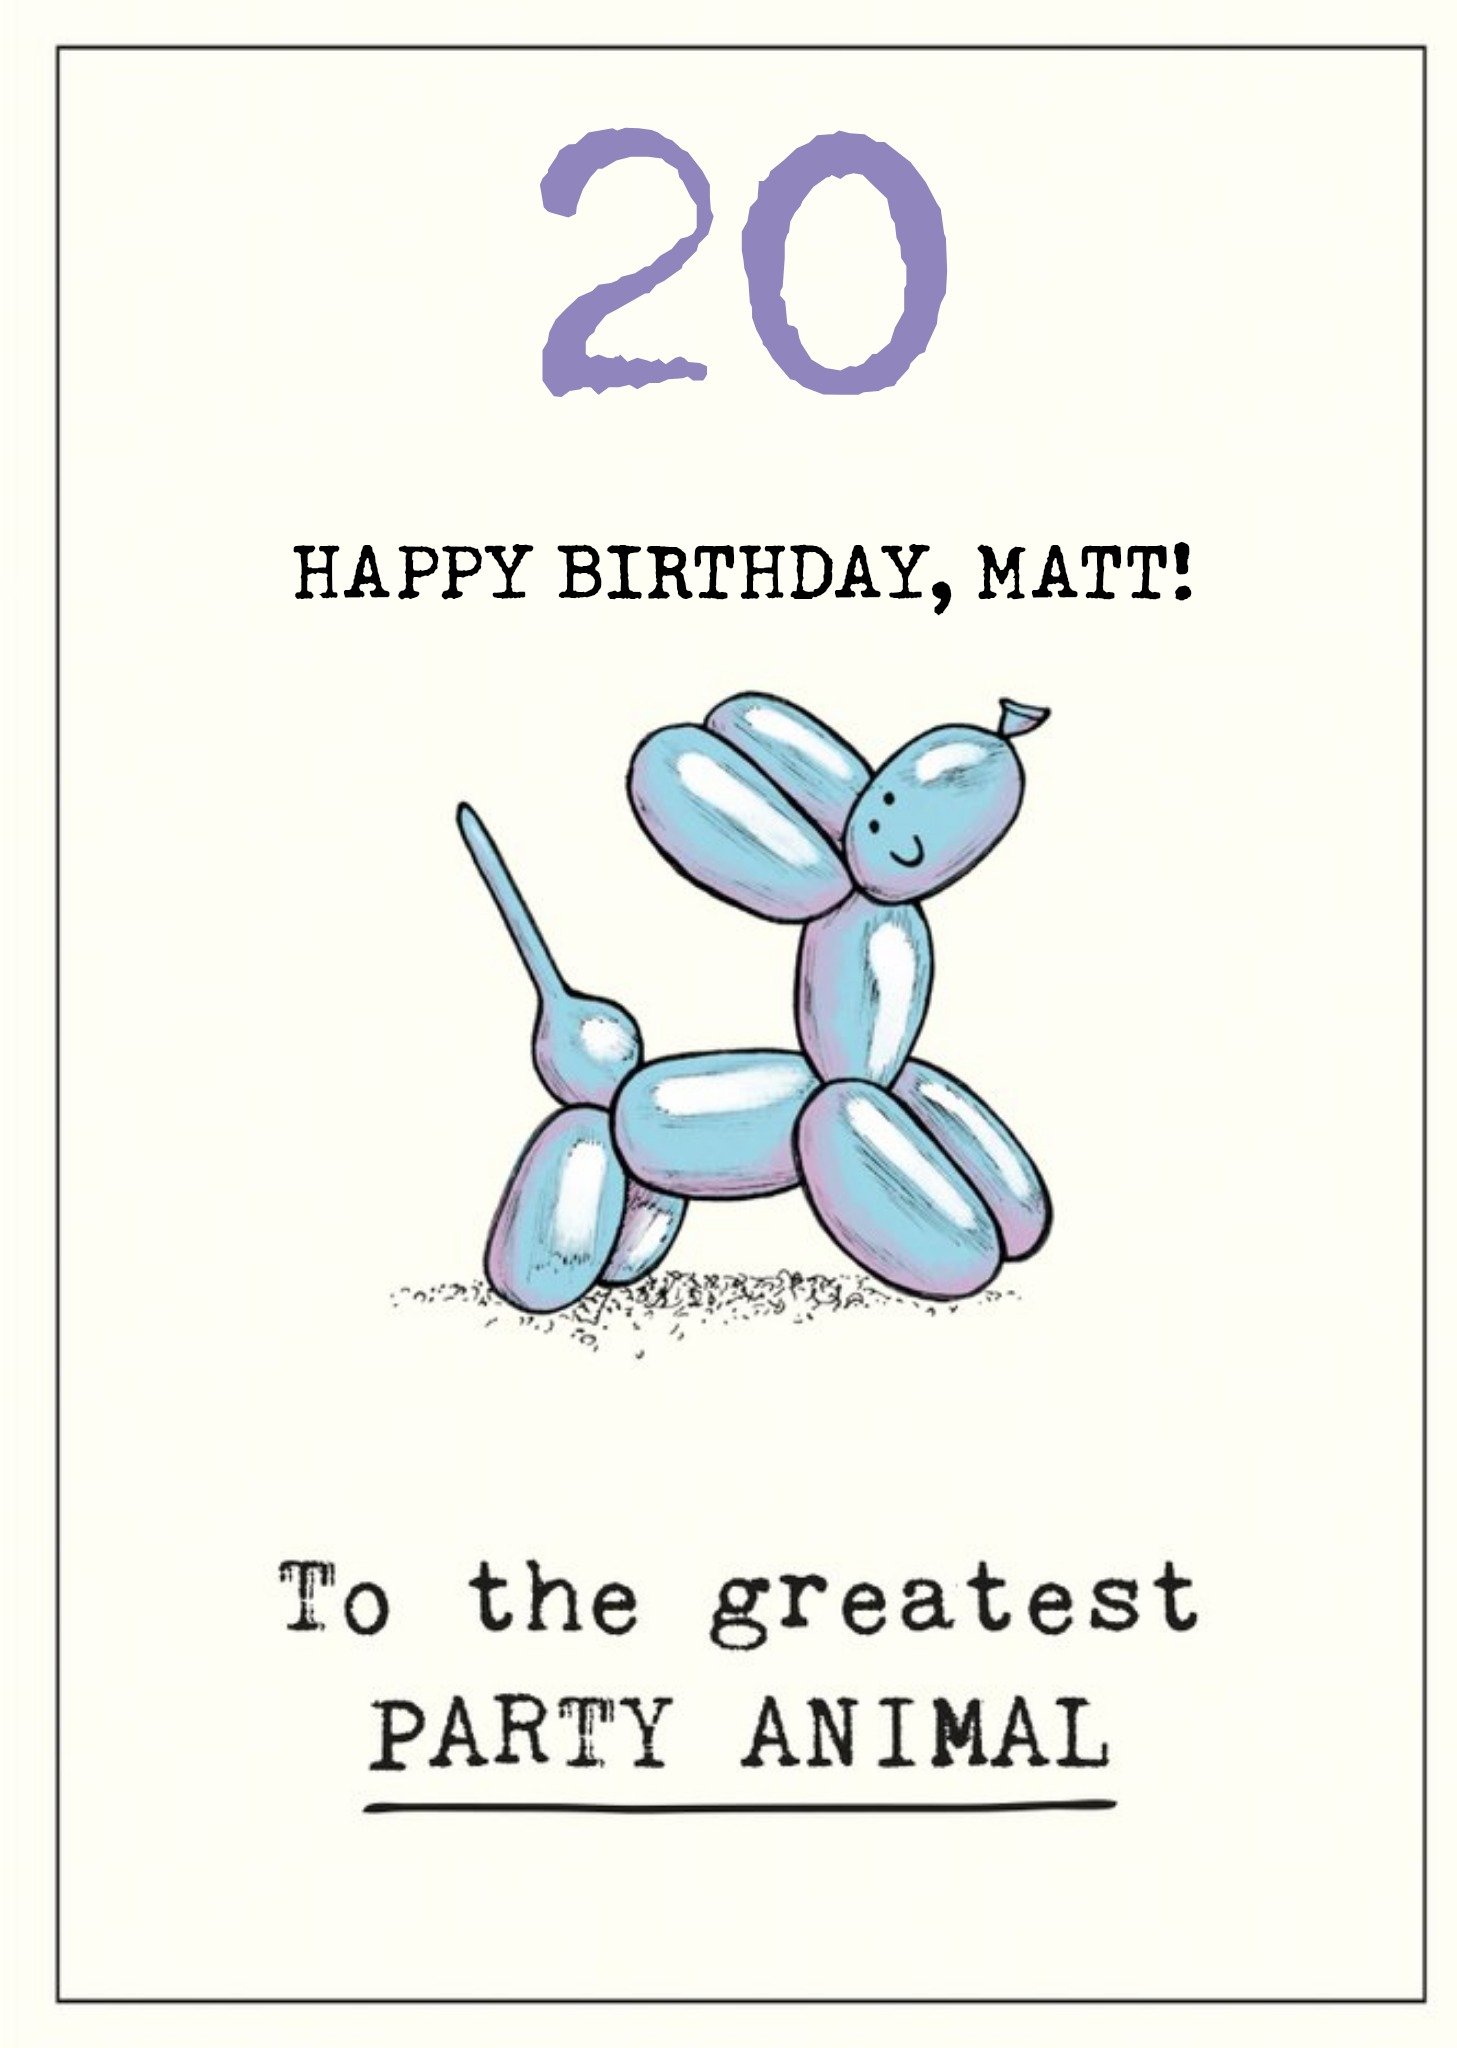 Moonpig Funny Illustrative Party Animal Balloon Birthday Card, Large